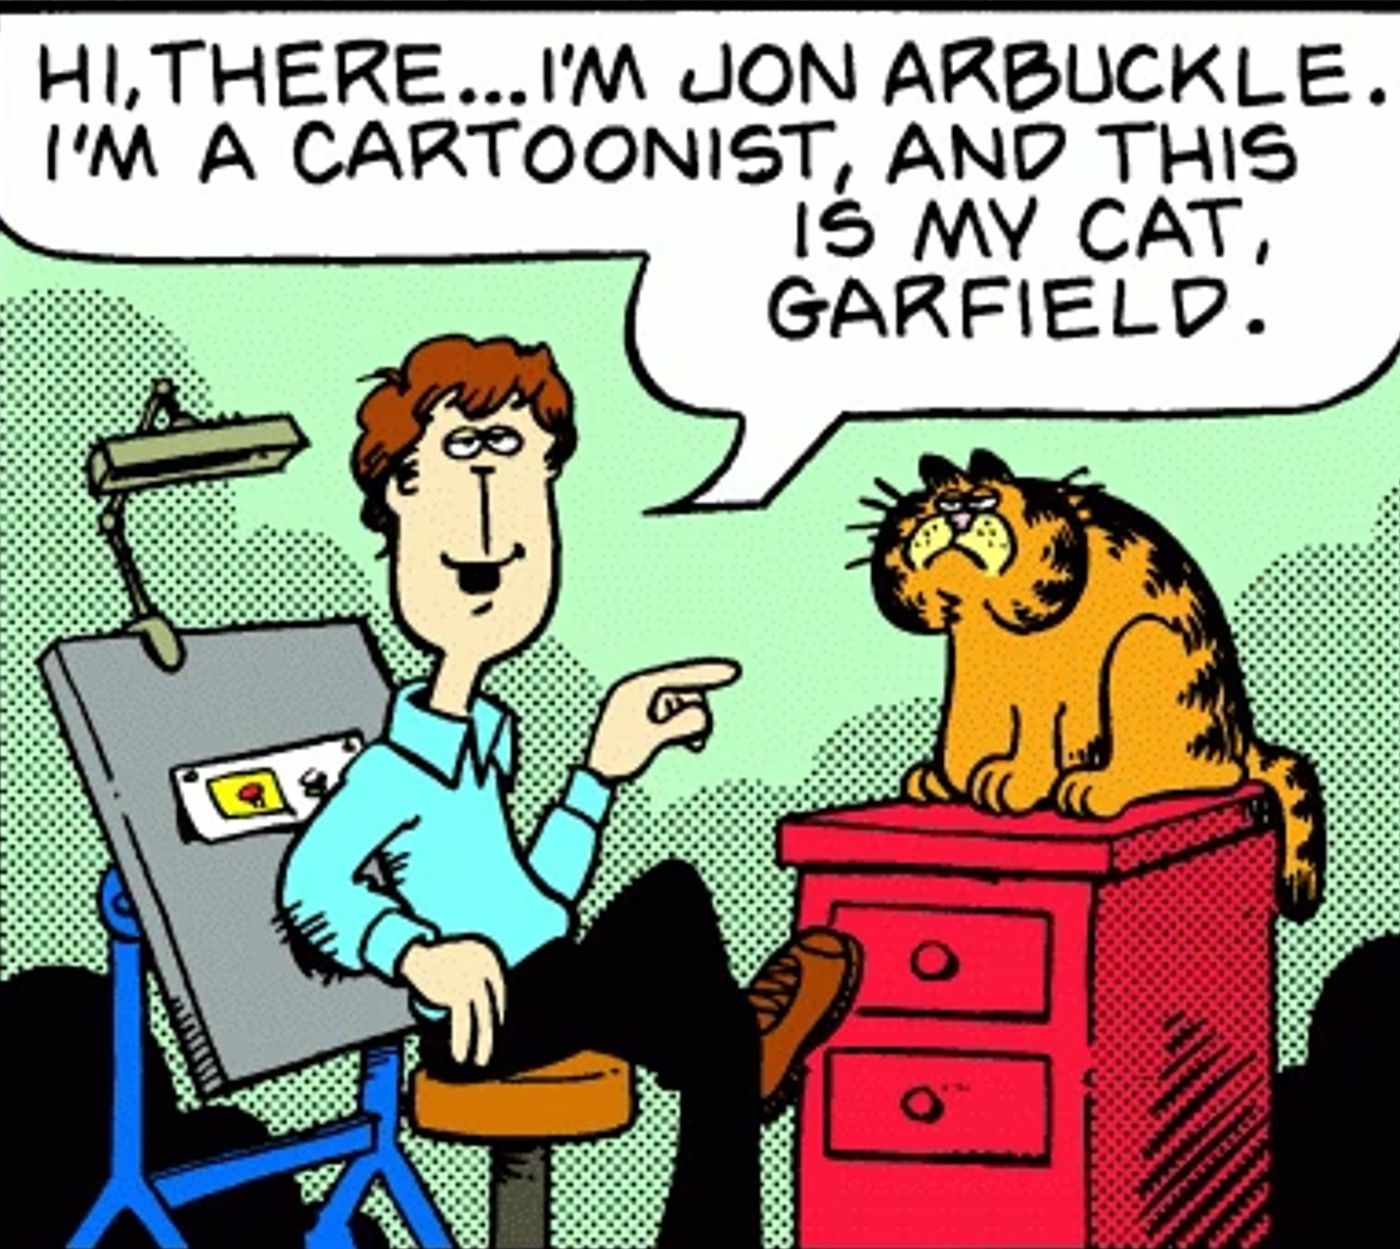 First Garfield comic, Jon Arbuckle introduces himself and Garfield